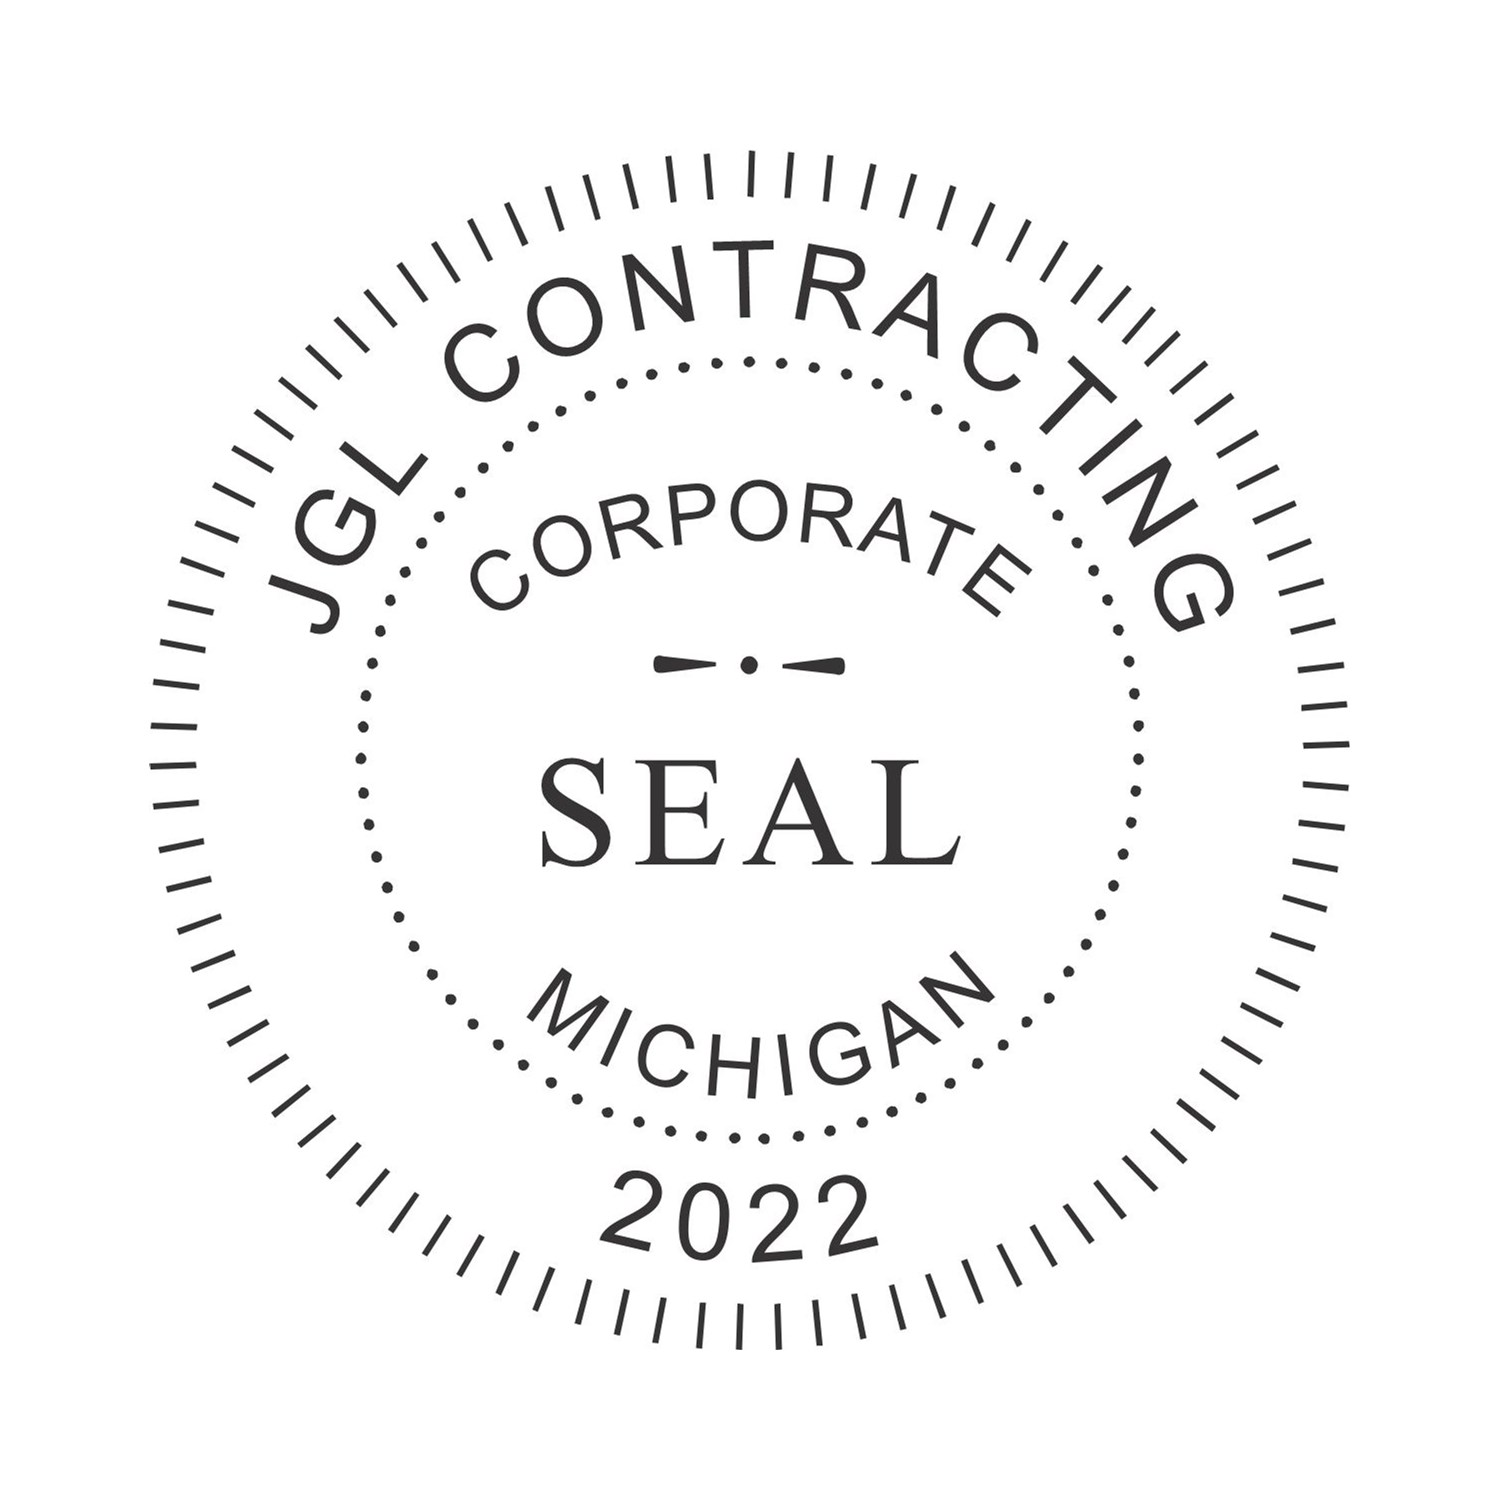 MaxLight 655 Corporate Seal Stamp